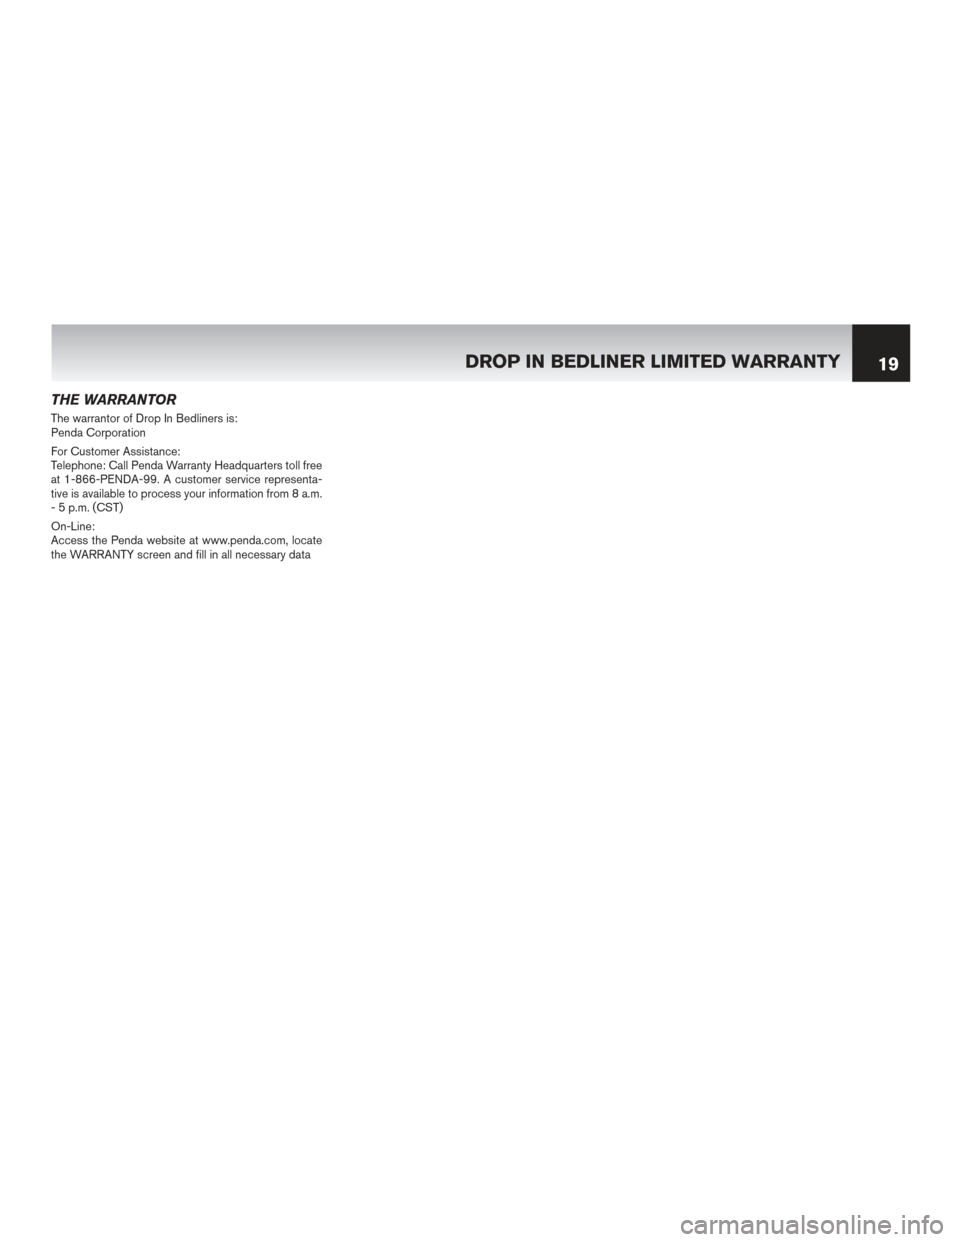 NISSAN GT-R 2014 R35 Warranty Booklet THE WARRANTOR
The warrantor of Drop In Bedliners is:
Penda Corporation
For Customer Assistance:
Telephone: Call Penda Warranty Headquarters toll free
at 1-866-PENDA-99. A customer service representa-
